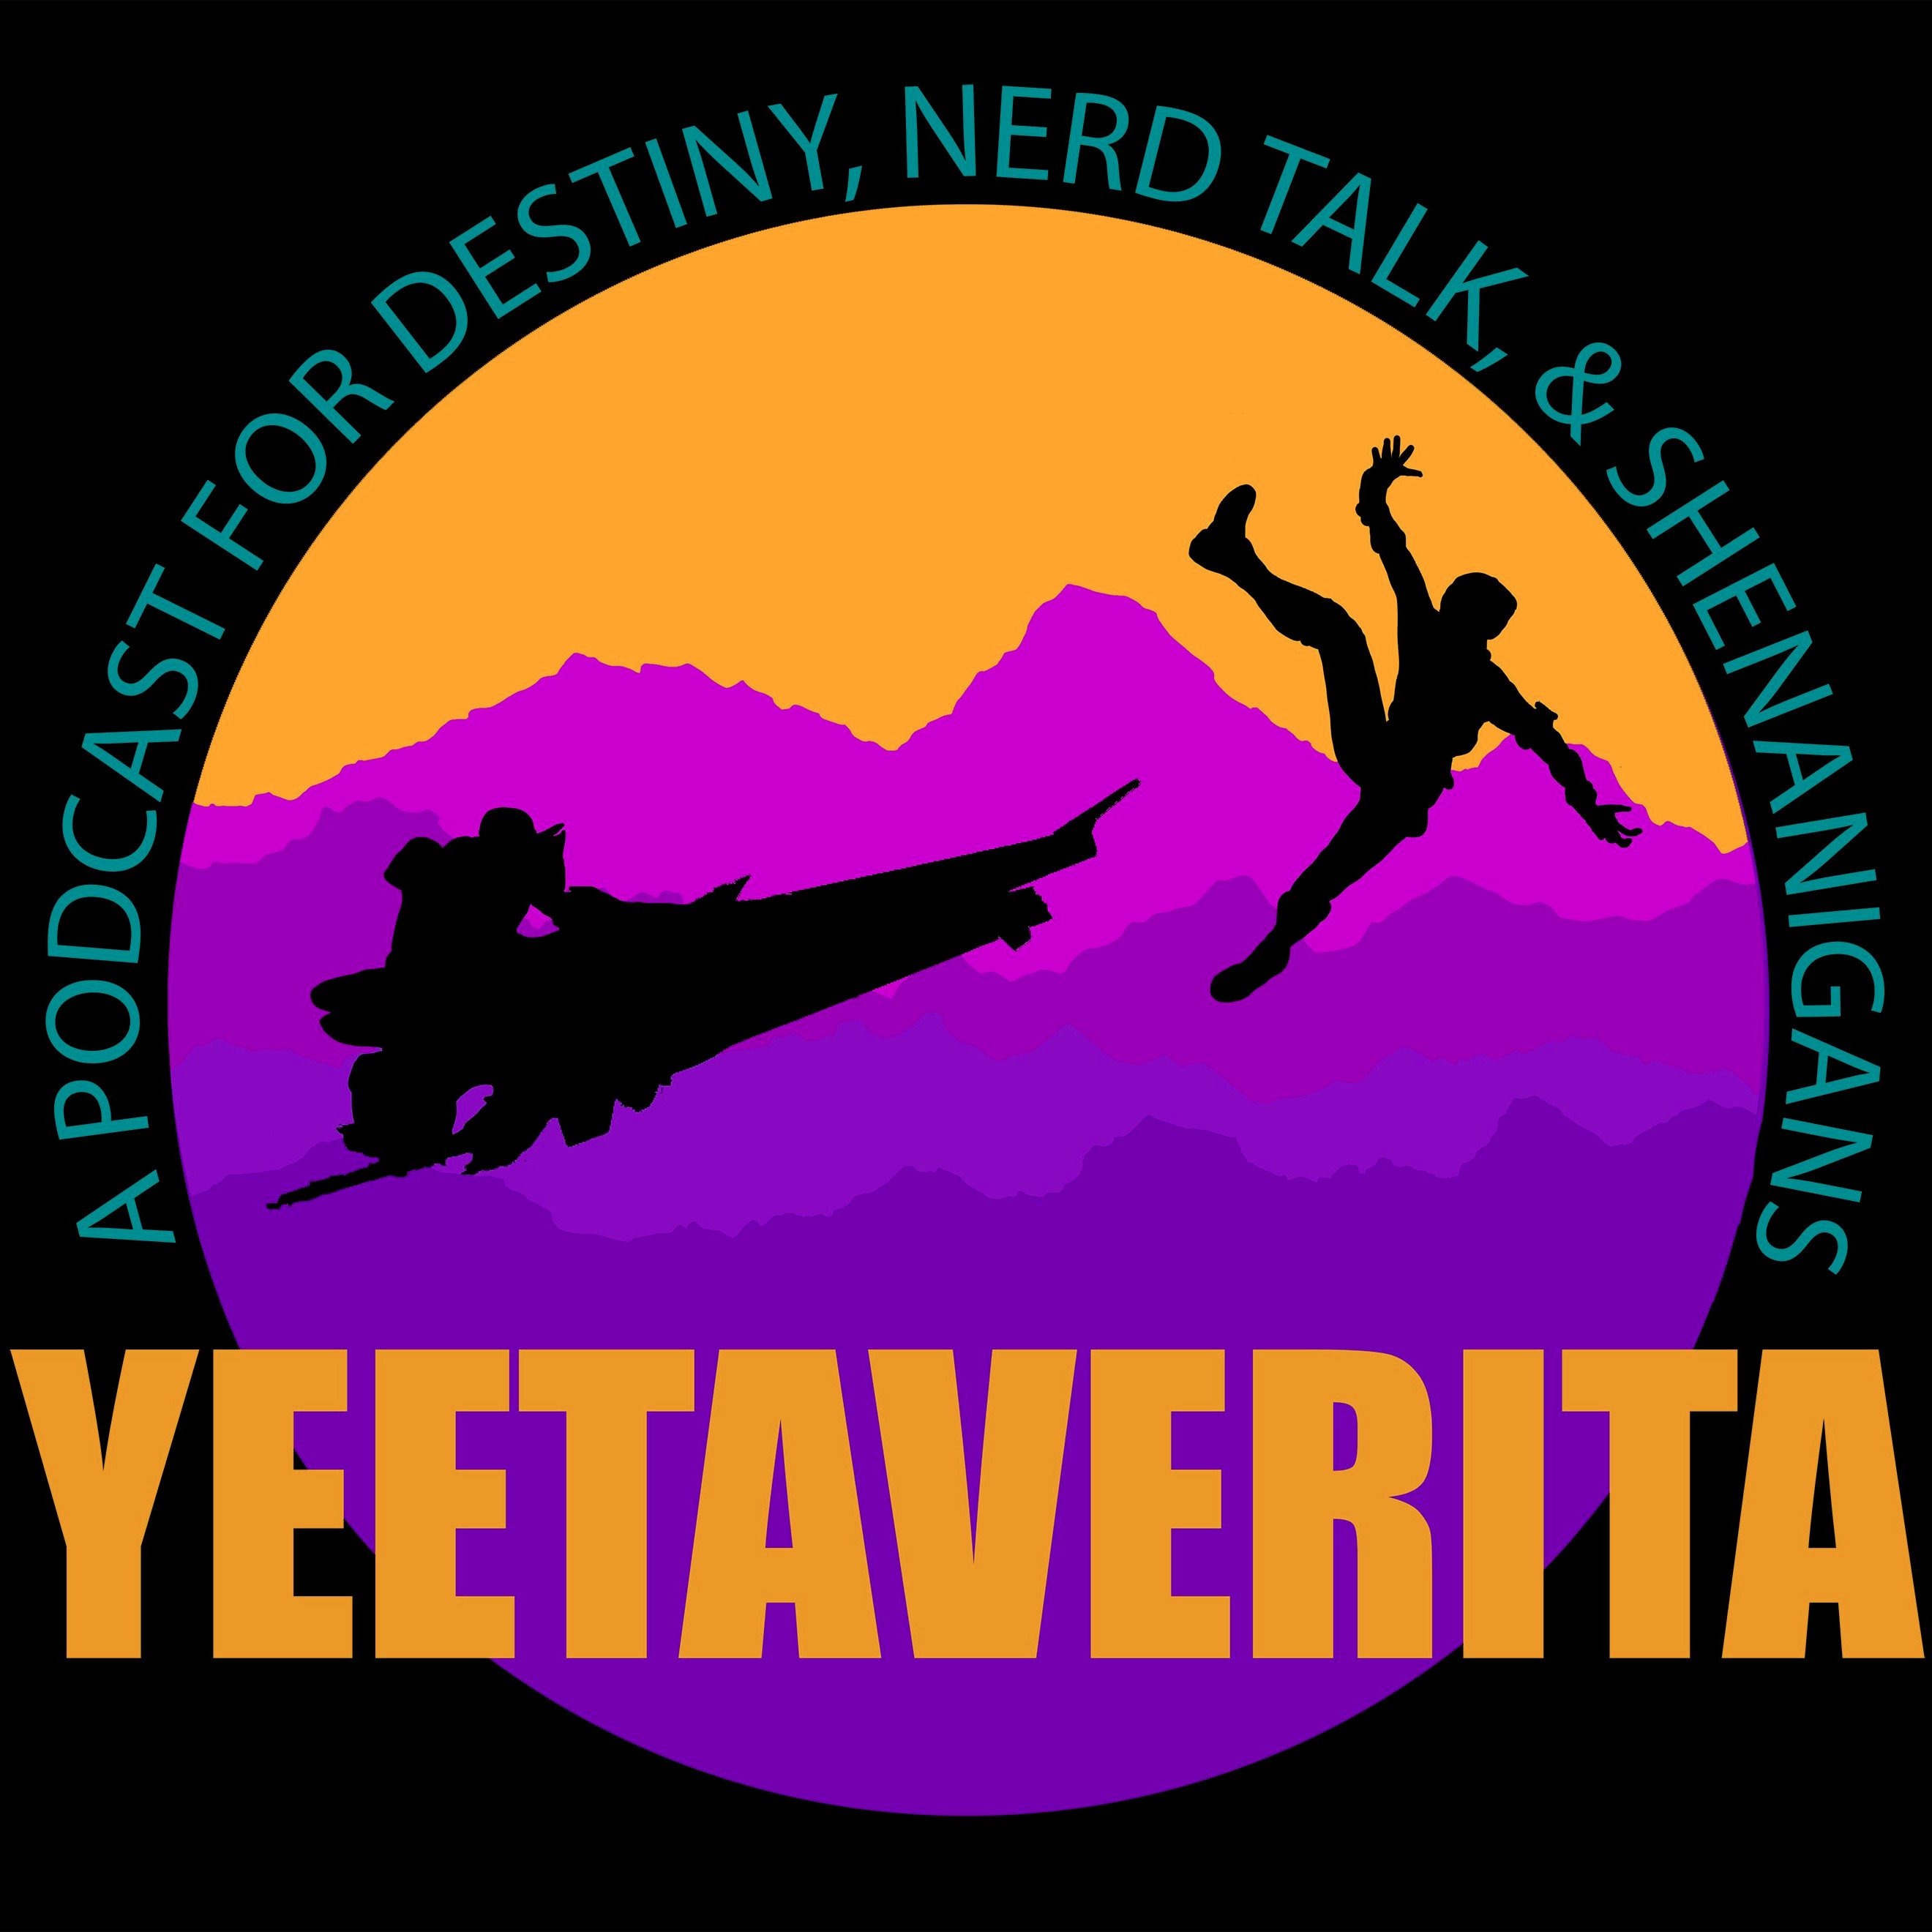 The YeetaVerita Podcast